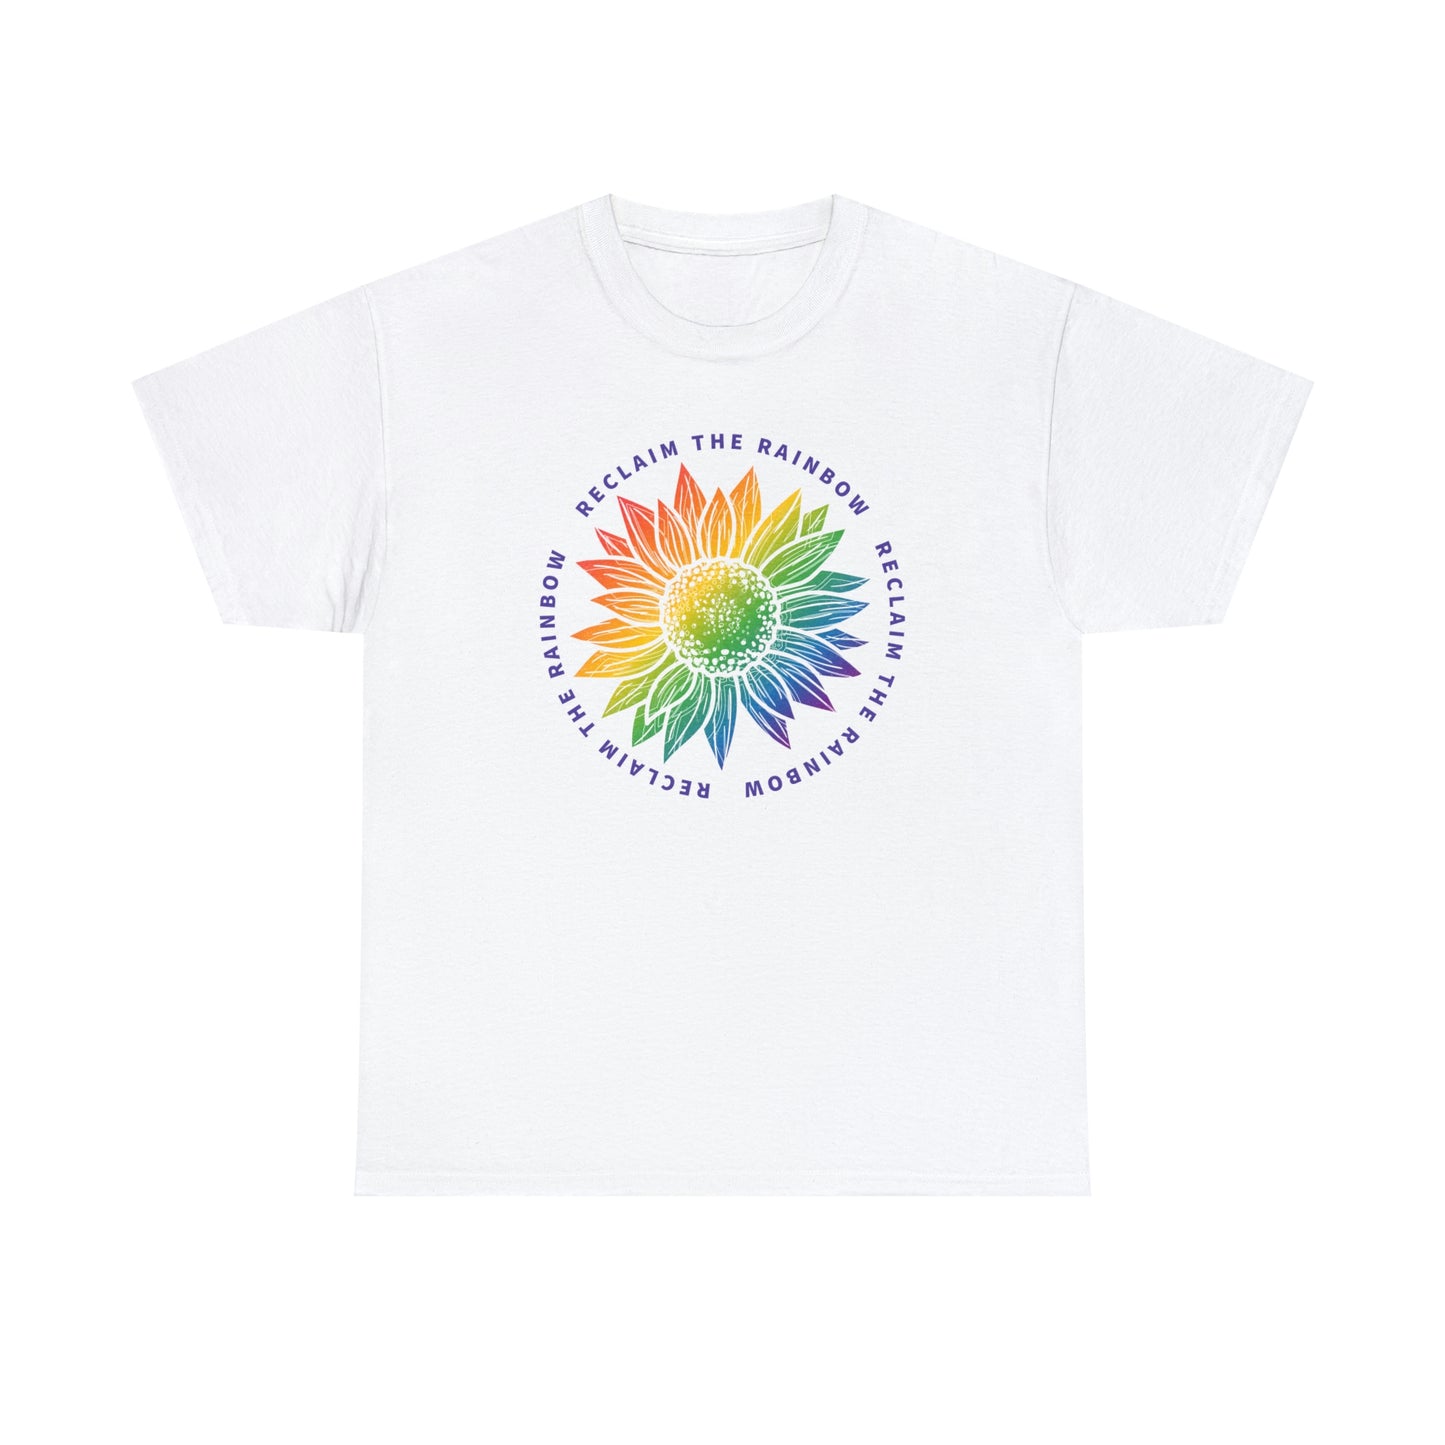 Reclaim The Rainbow T-Shirt For Take Back The Rainbow TShirt For Spiritual Shirt For Genesis 9:17 T Shirt Sunflower Tee For Christian Shirt